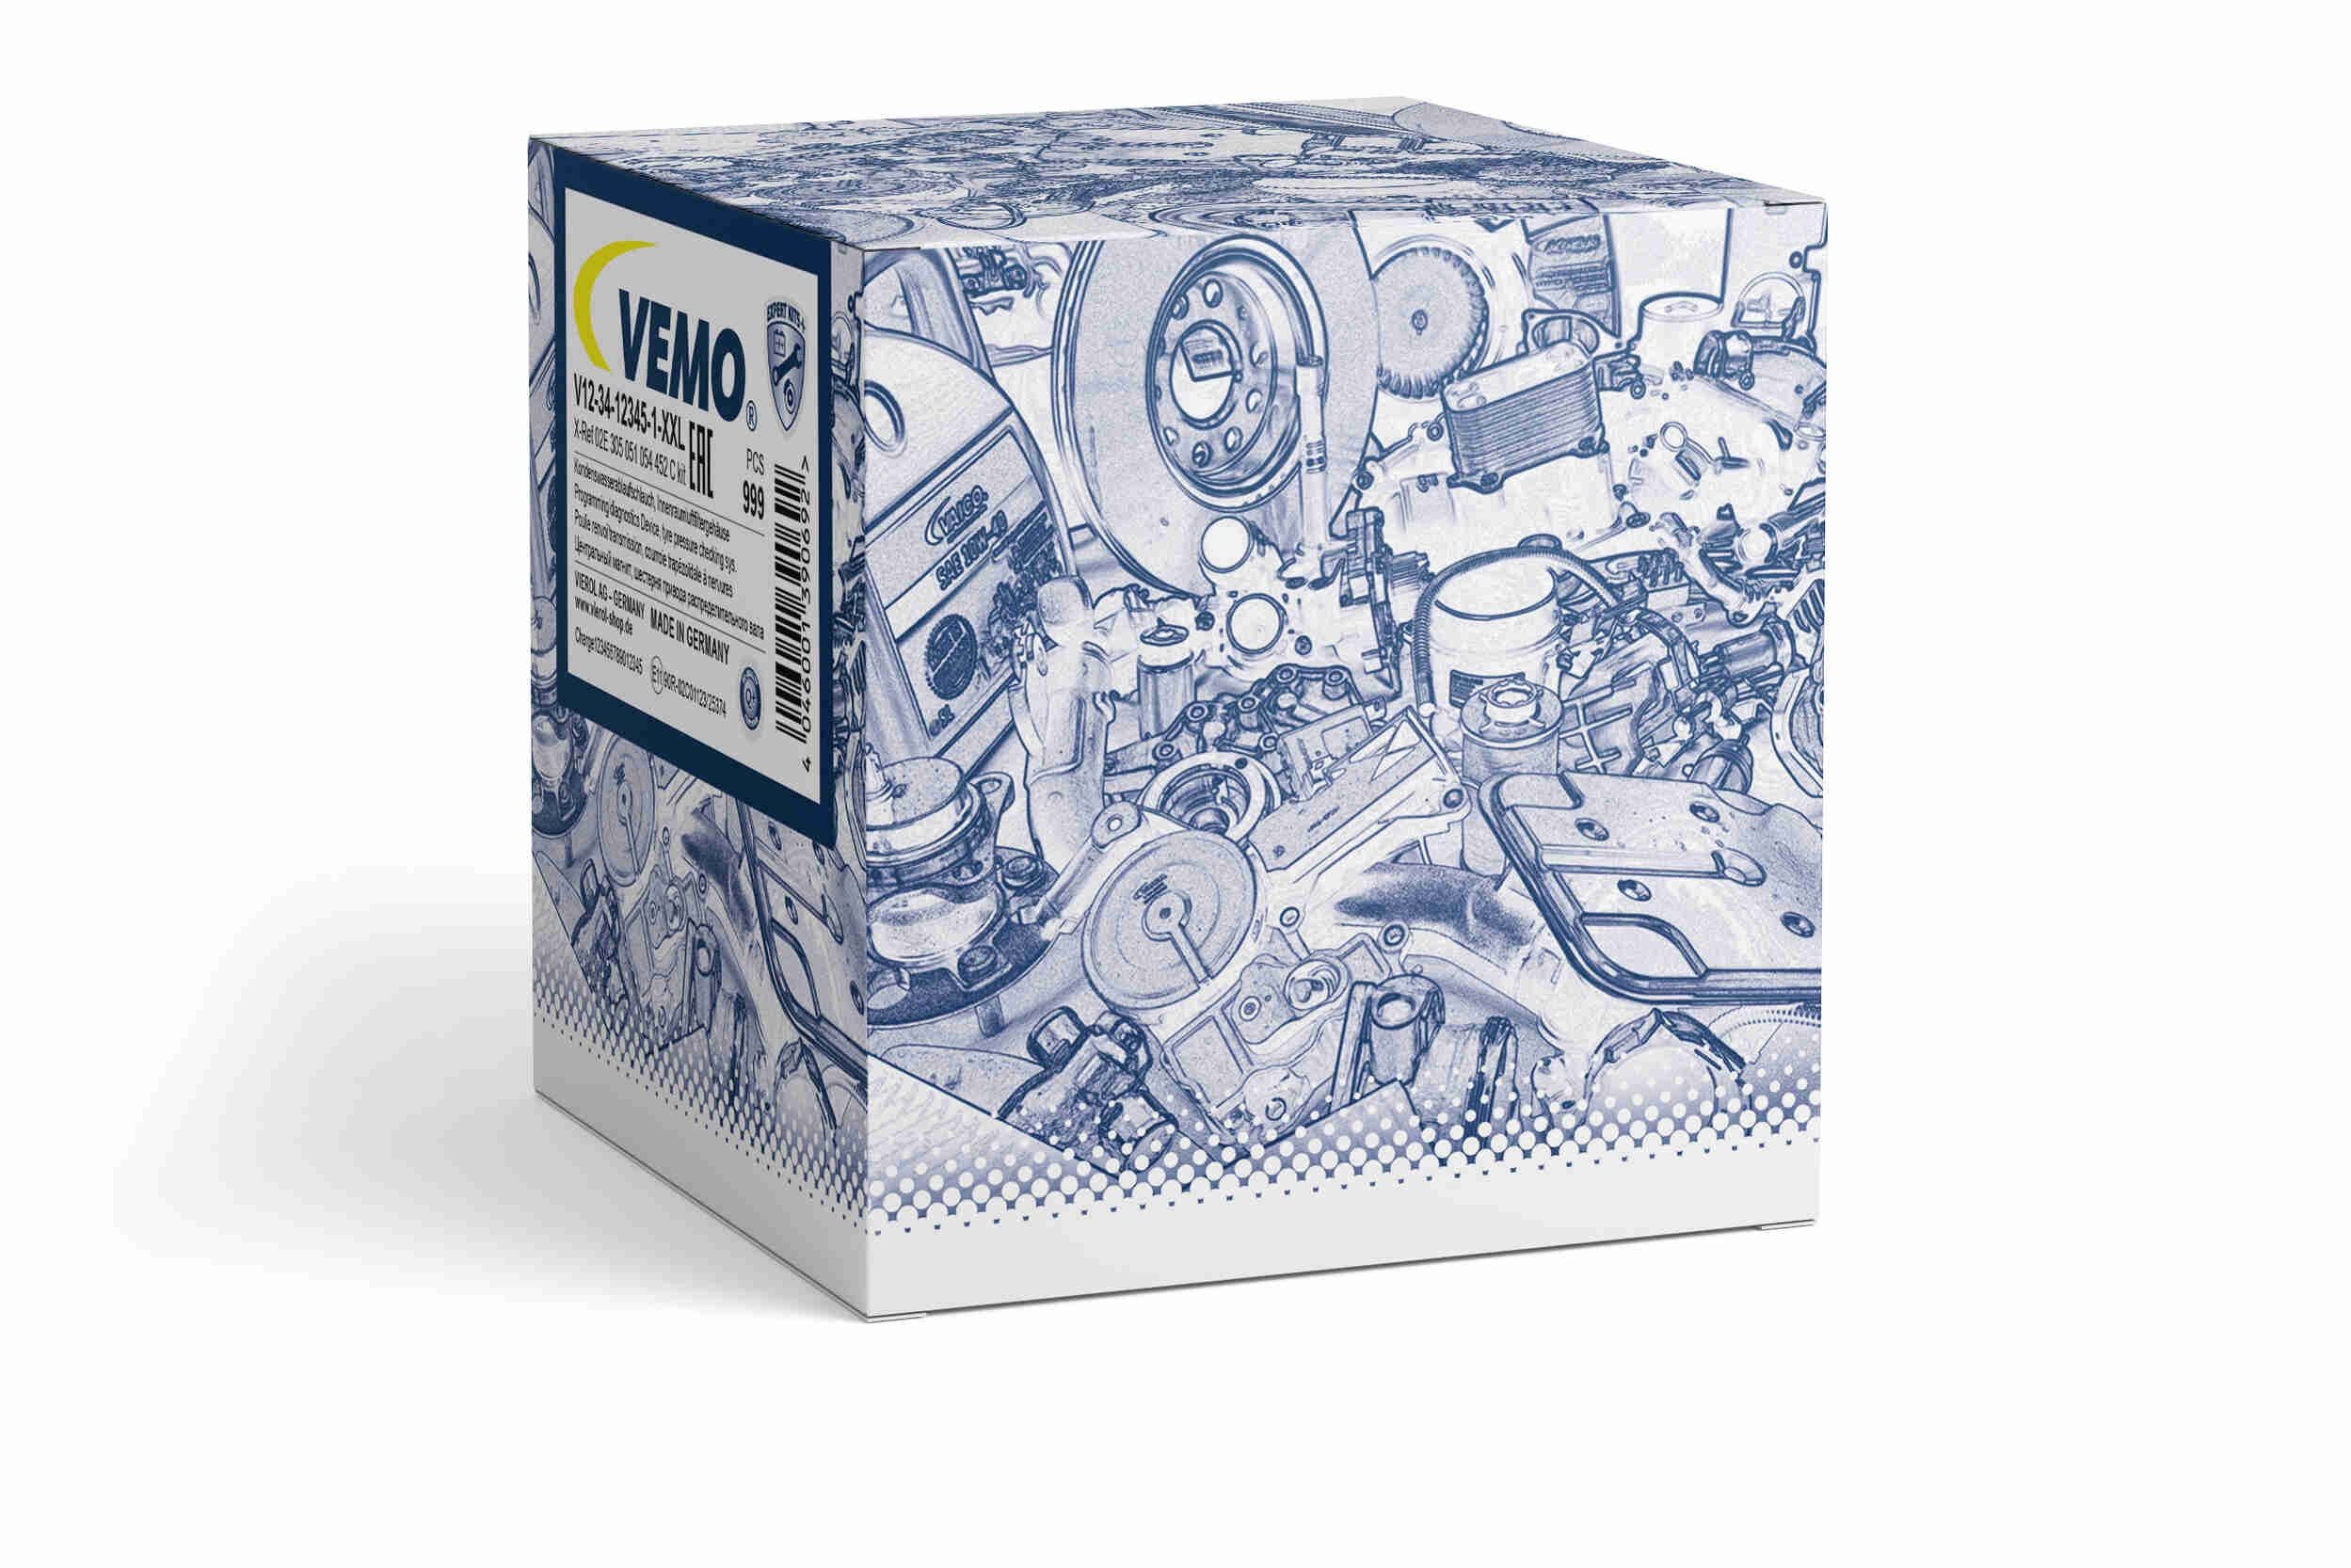 V48040004 Thermal fan clutch Original VEMO Quality VEMO V48-04-0004 review and test